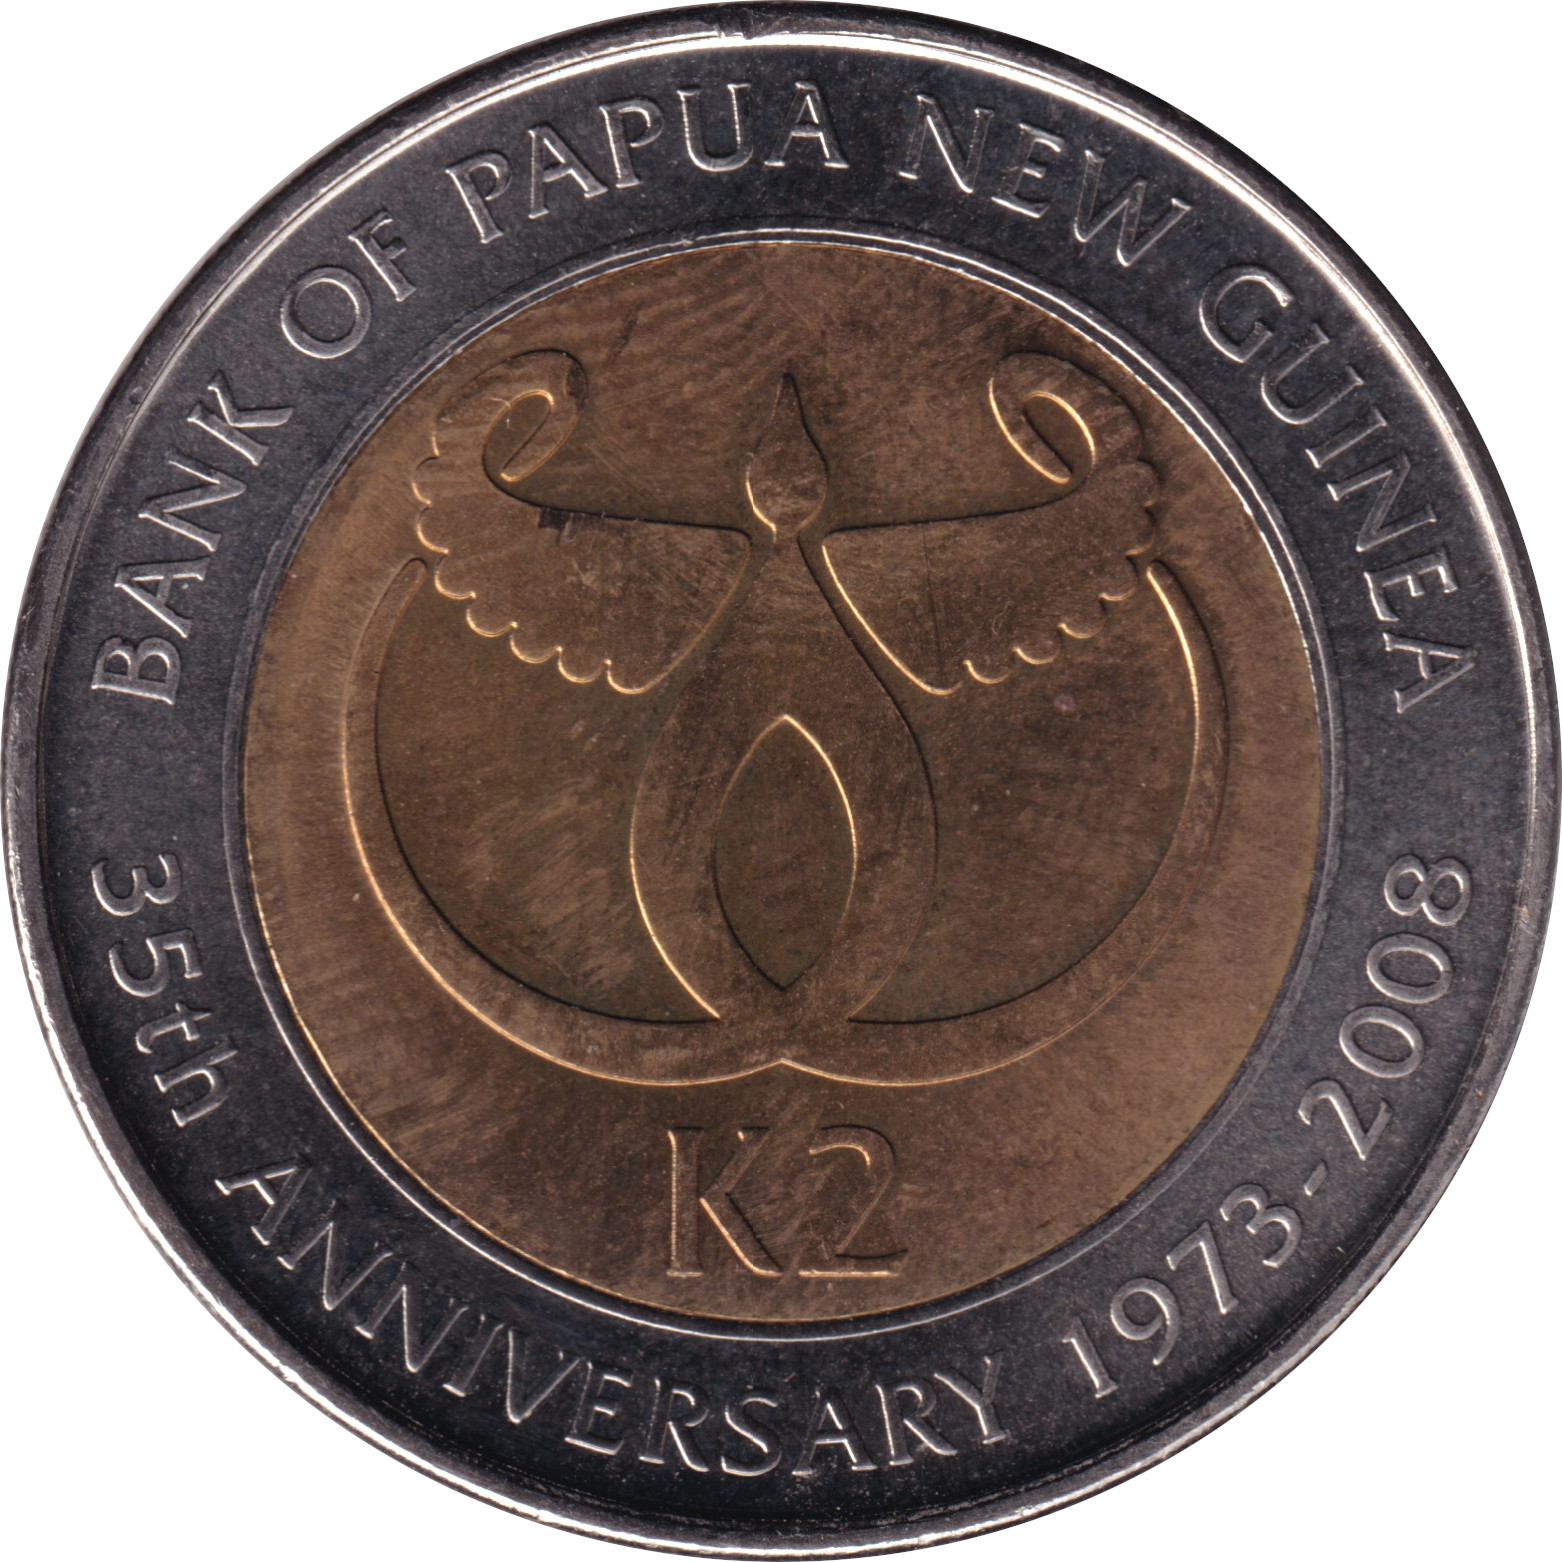 2 kina - Banque de Papouasie - 35 ans